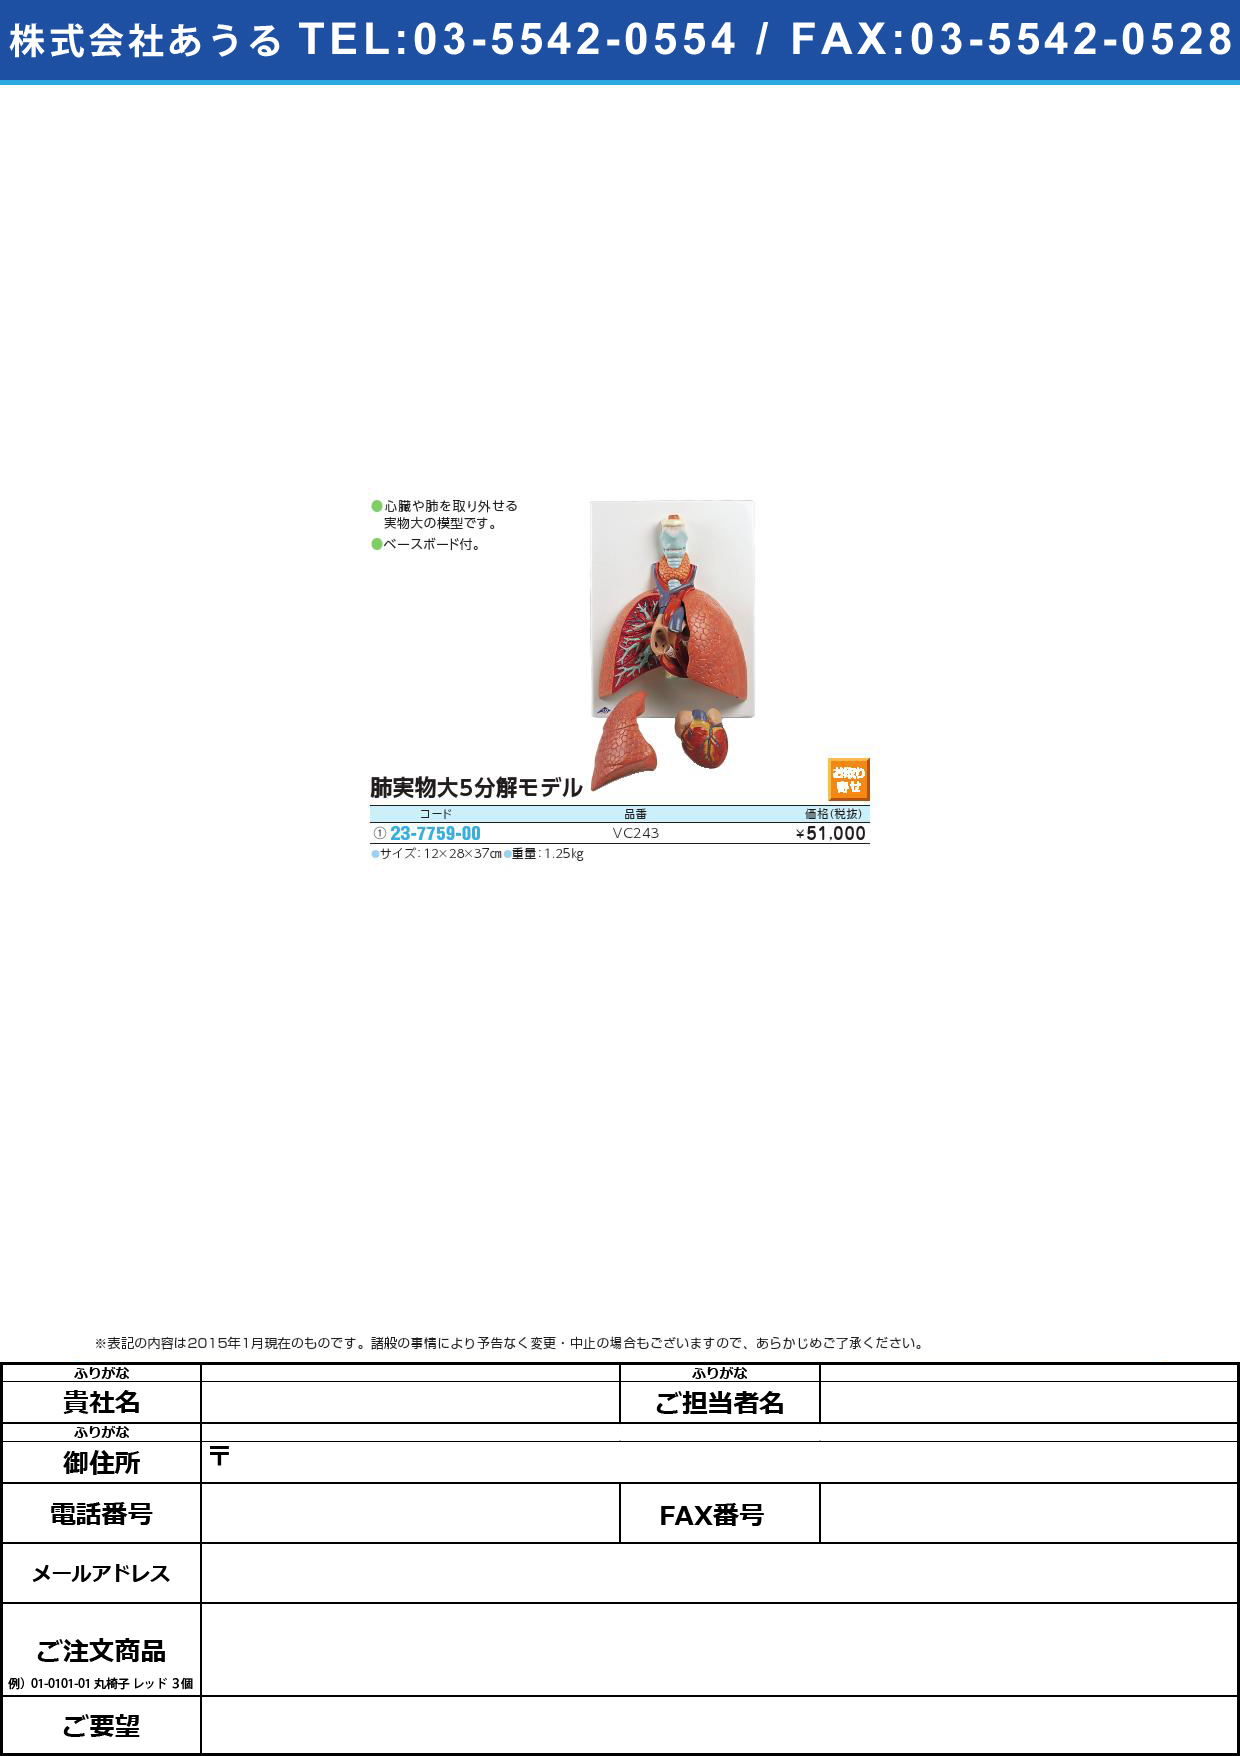 (23-7759-00)肺 実物大・５分解モデル ﾊｲｼﾞﾂﾌﾞﾂﾀﾞｲ5ﾌﾞﾝｶｲﾓﾃﾞ(23-7759-00)VC243【1台単位】【2015年カタログ商品】